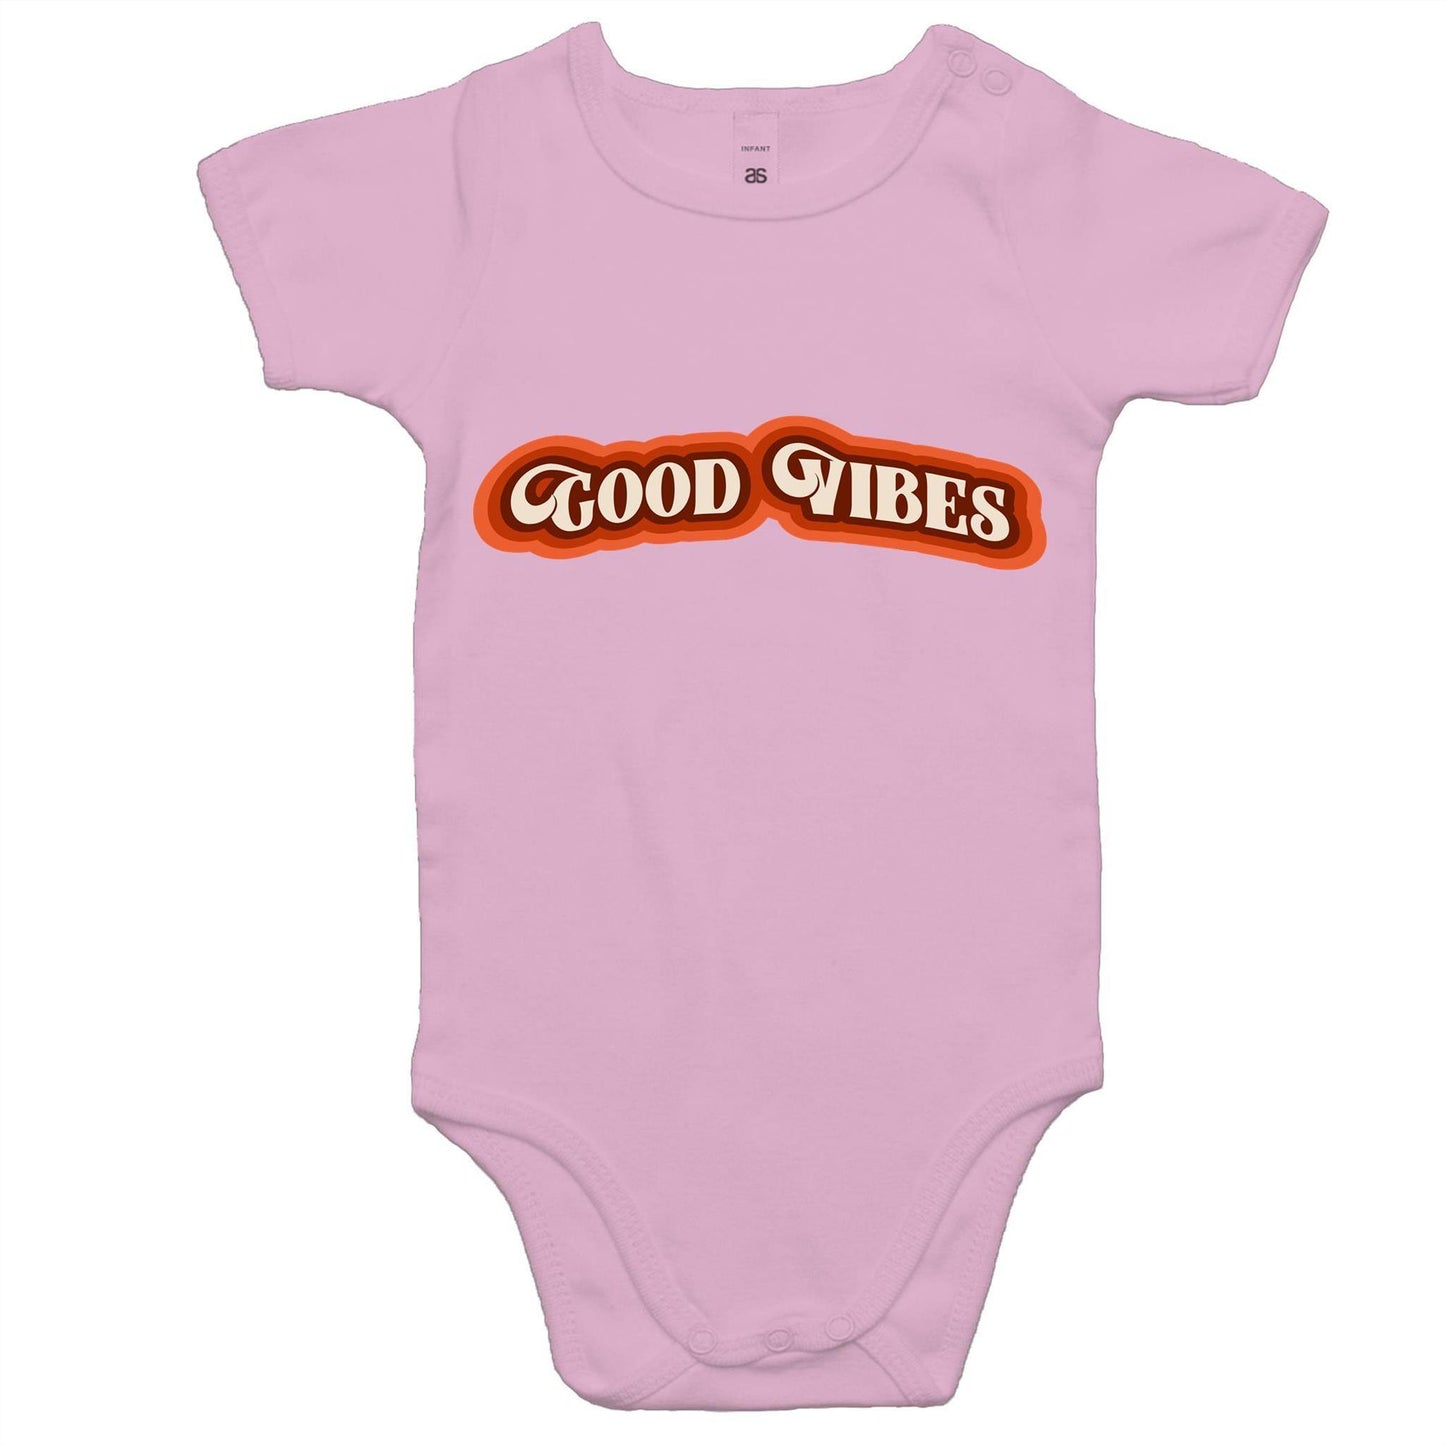 Good Vibes - Baby Bodysuit Pink Baby Bodysuit kids Retro